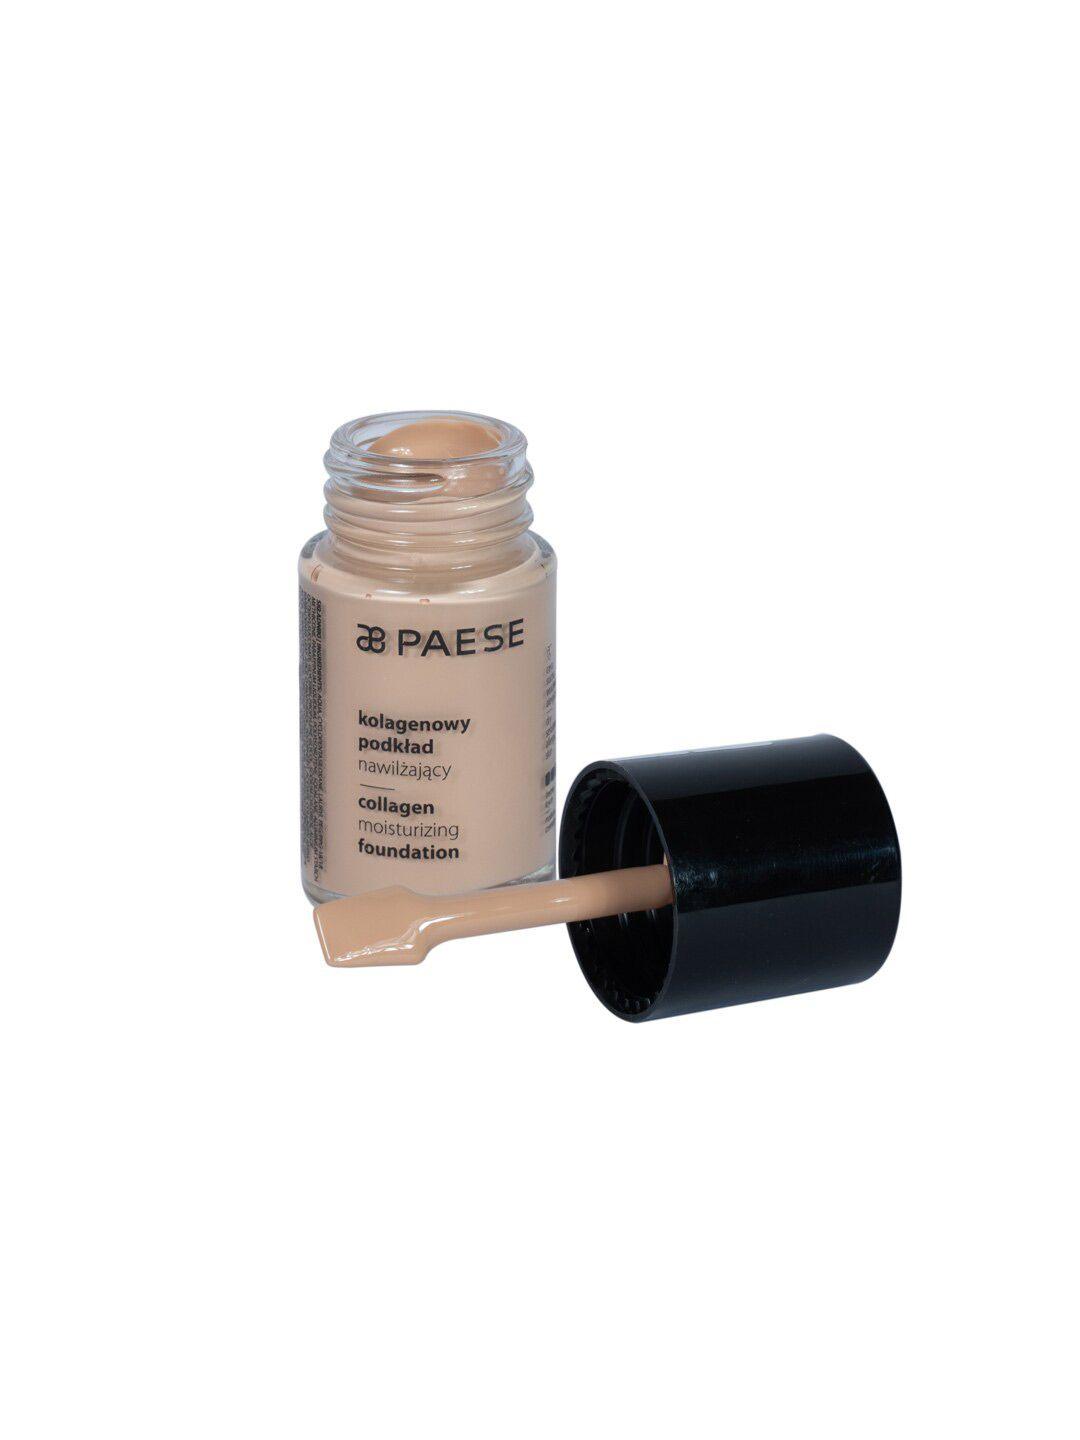 paese cosmetics collagen moisturizing foundation - light beige 301